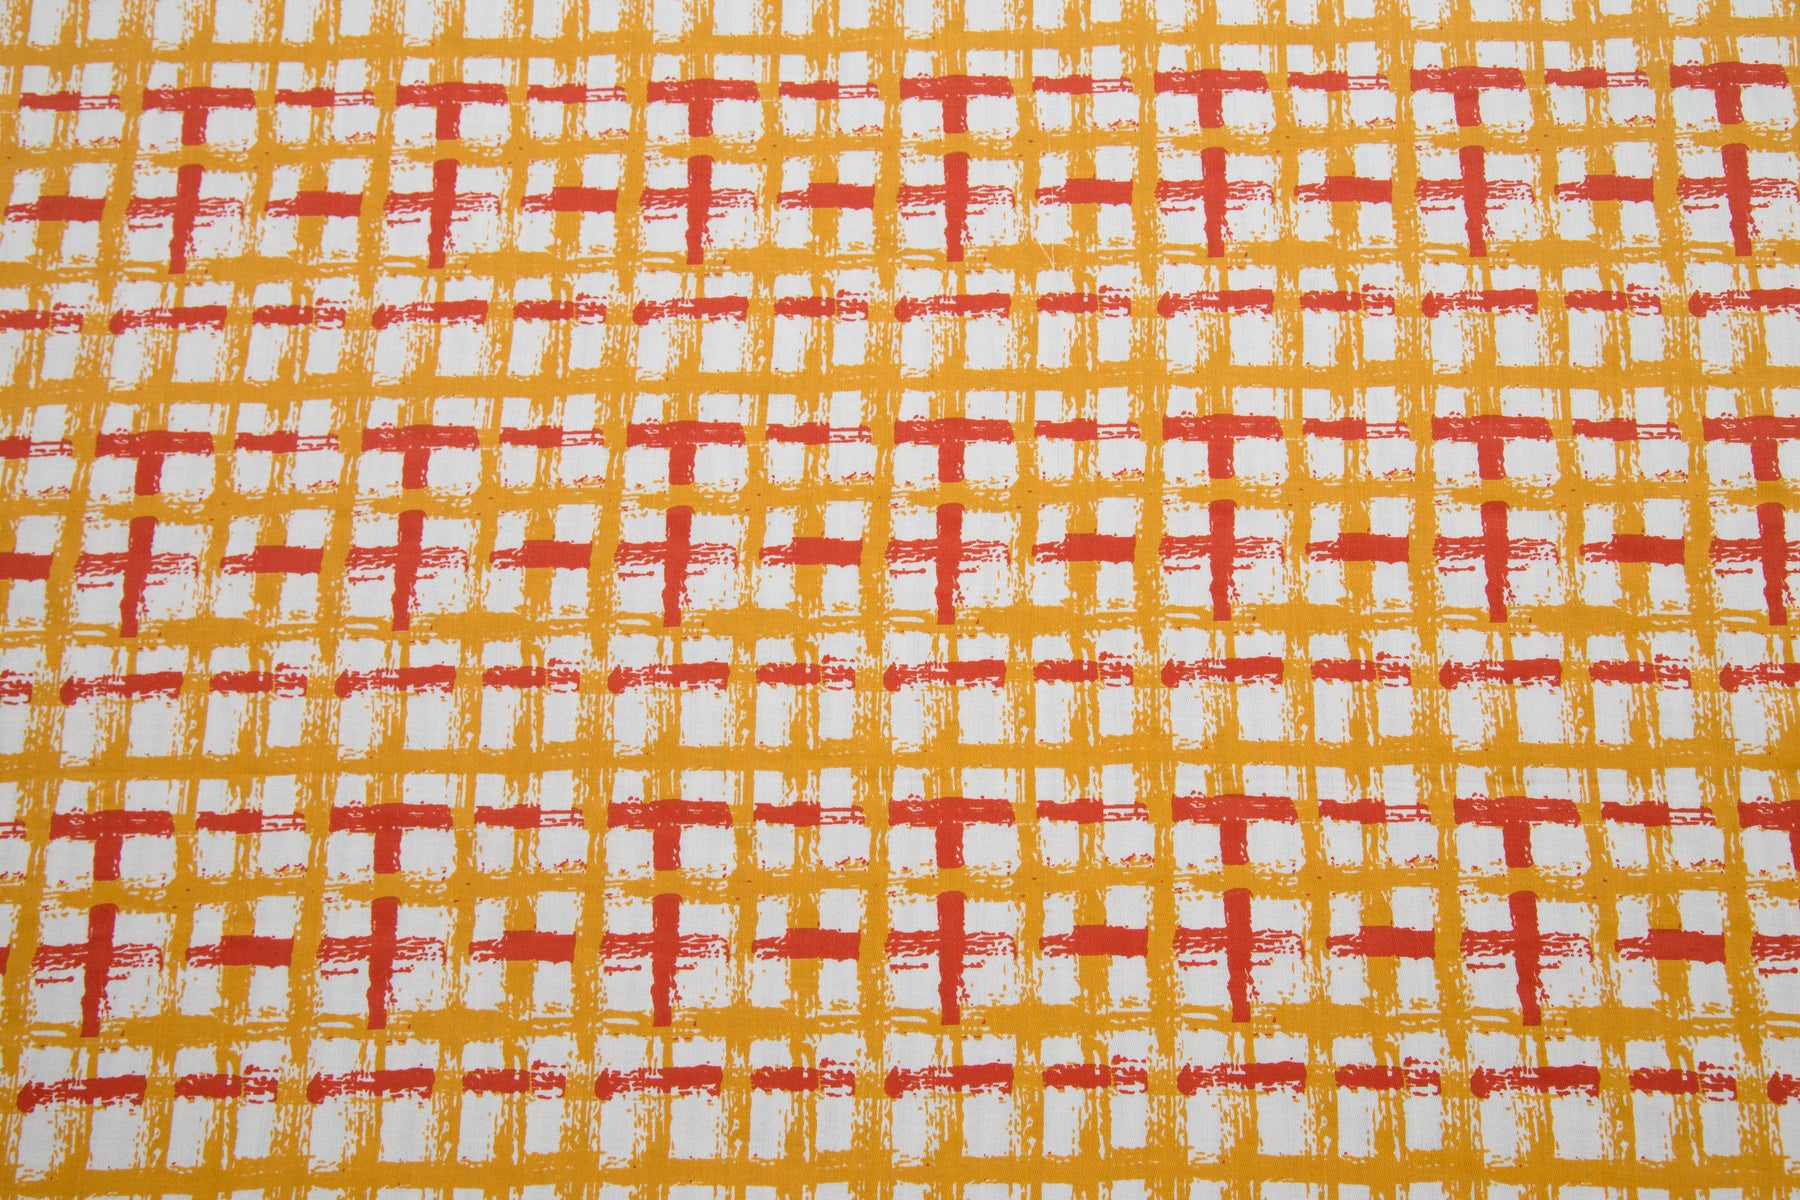 Donatella Breeze Printed 200 TC 100% Cotton Orange Bed Sheet